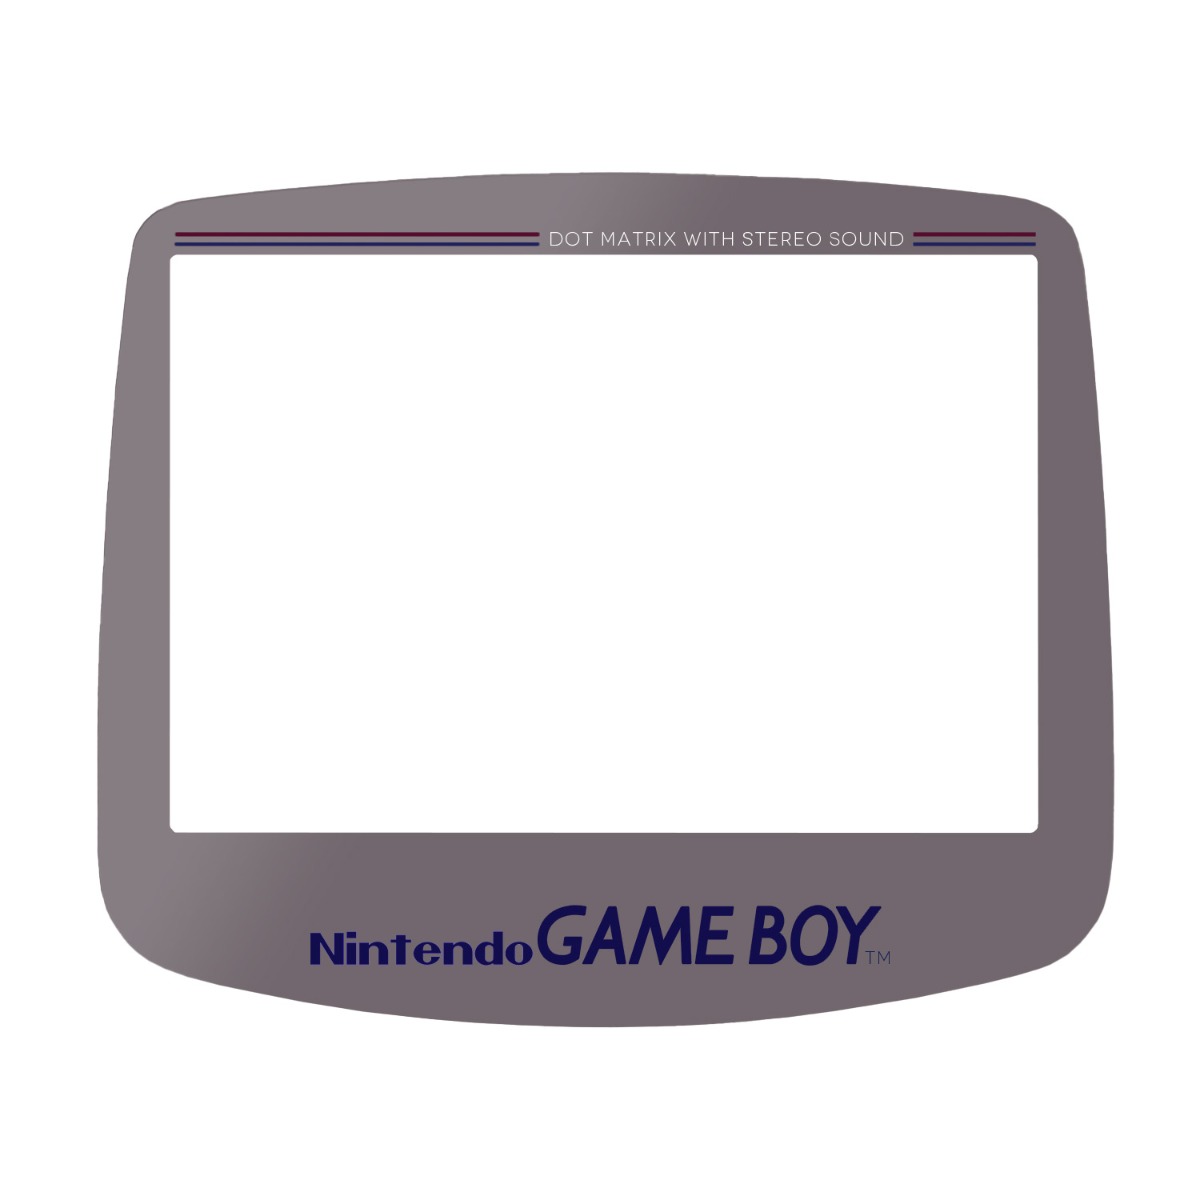 Game Boy Advance IPS schijf (DMG)